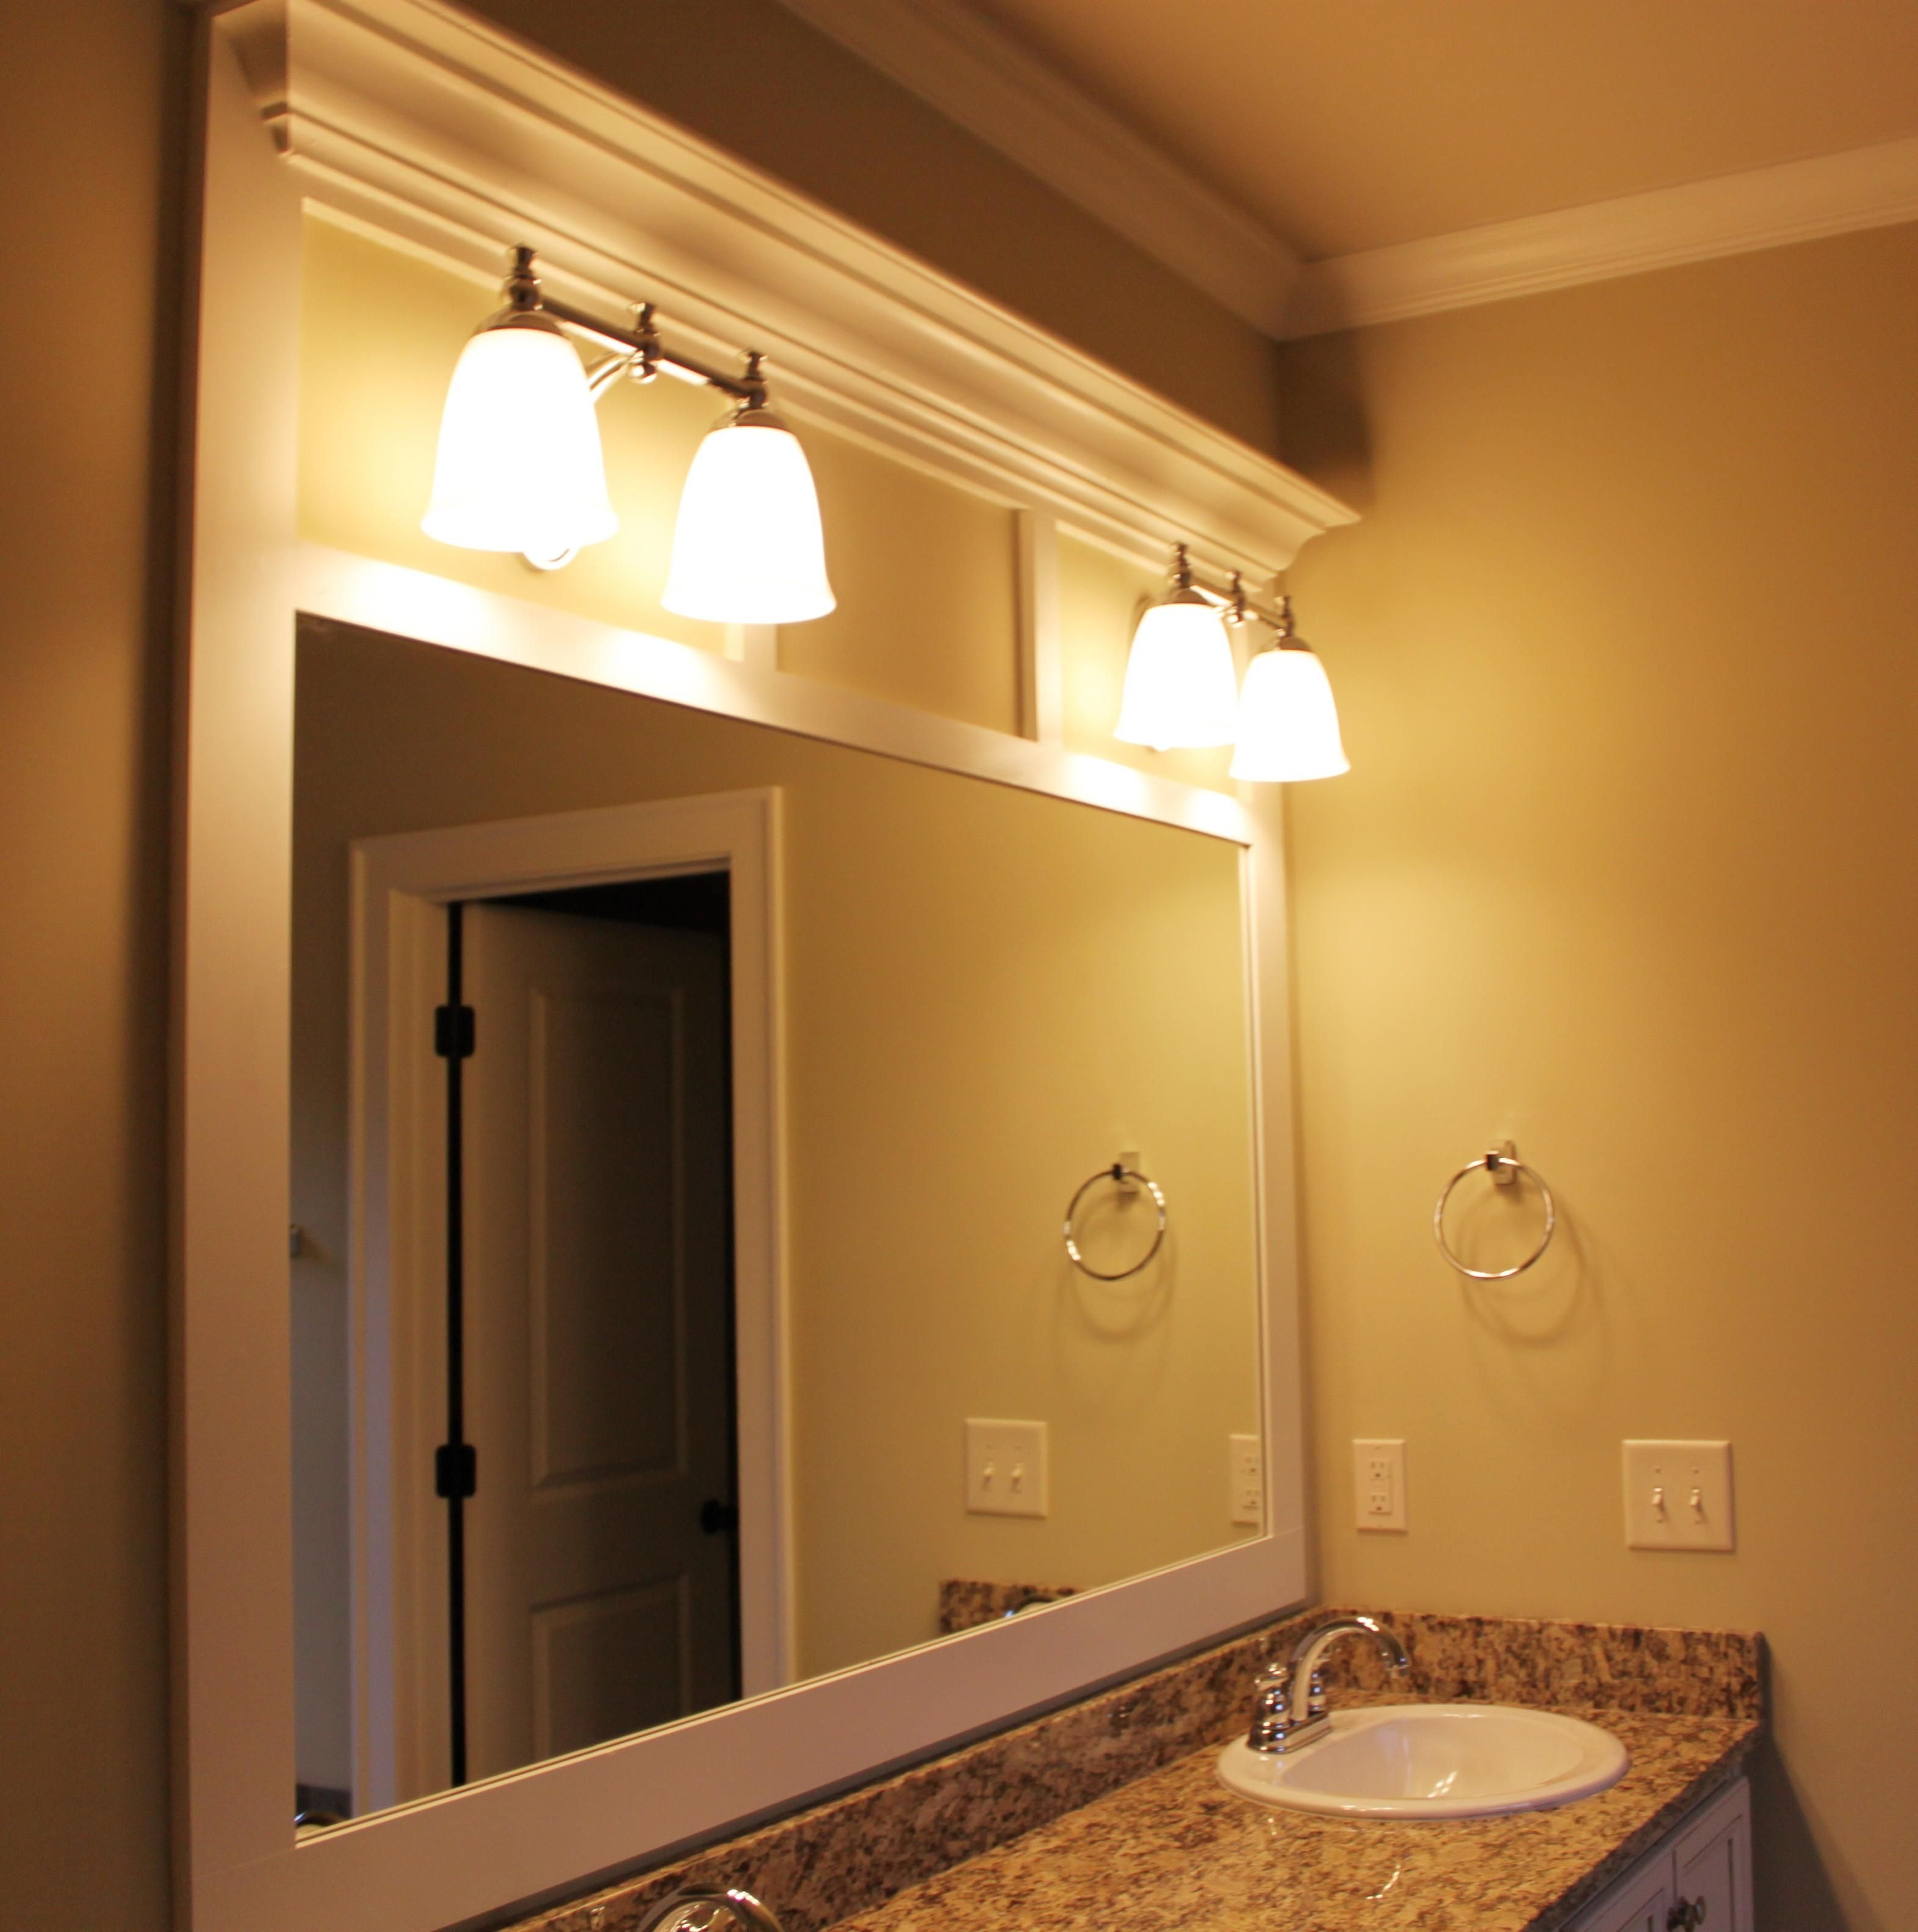 Bathroom : Safety Mirrors For Bathrooms Popular Home Design In Safety Mirrors For Bathrooms (View 5 of 20)